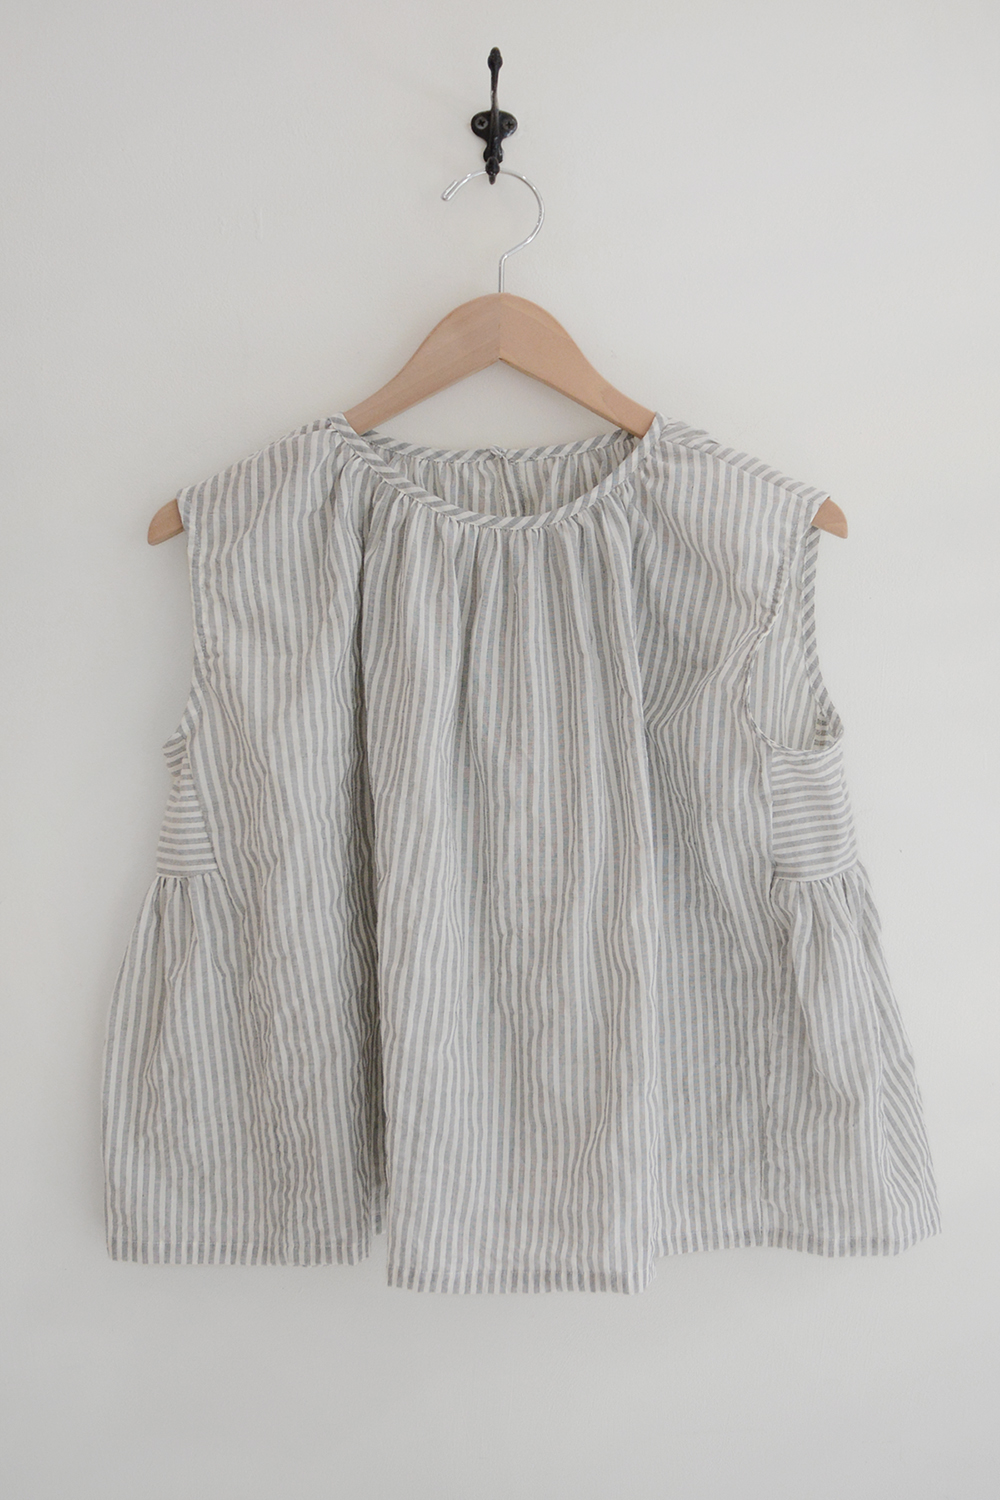 makie cotton camisole gray stripe top picture